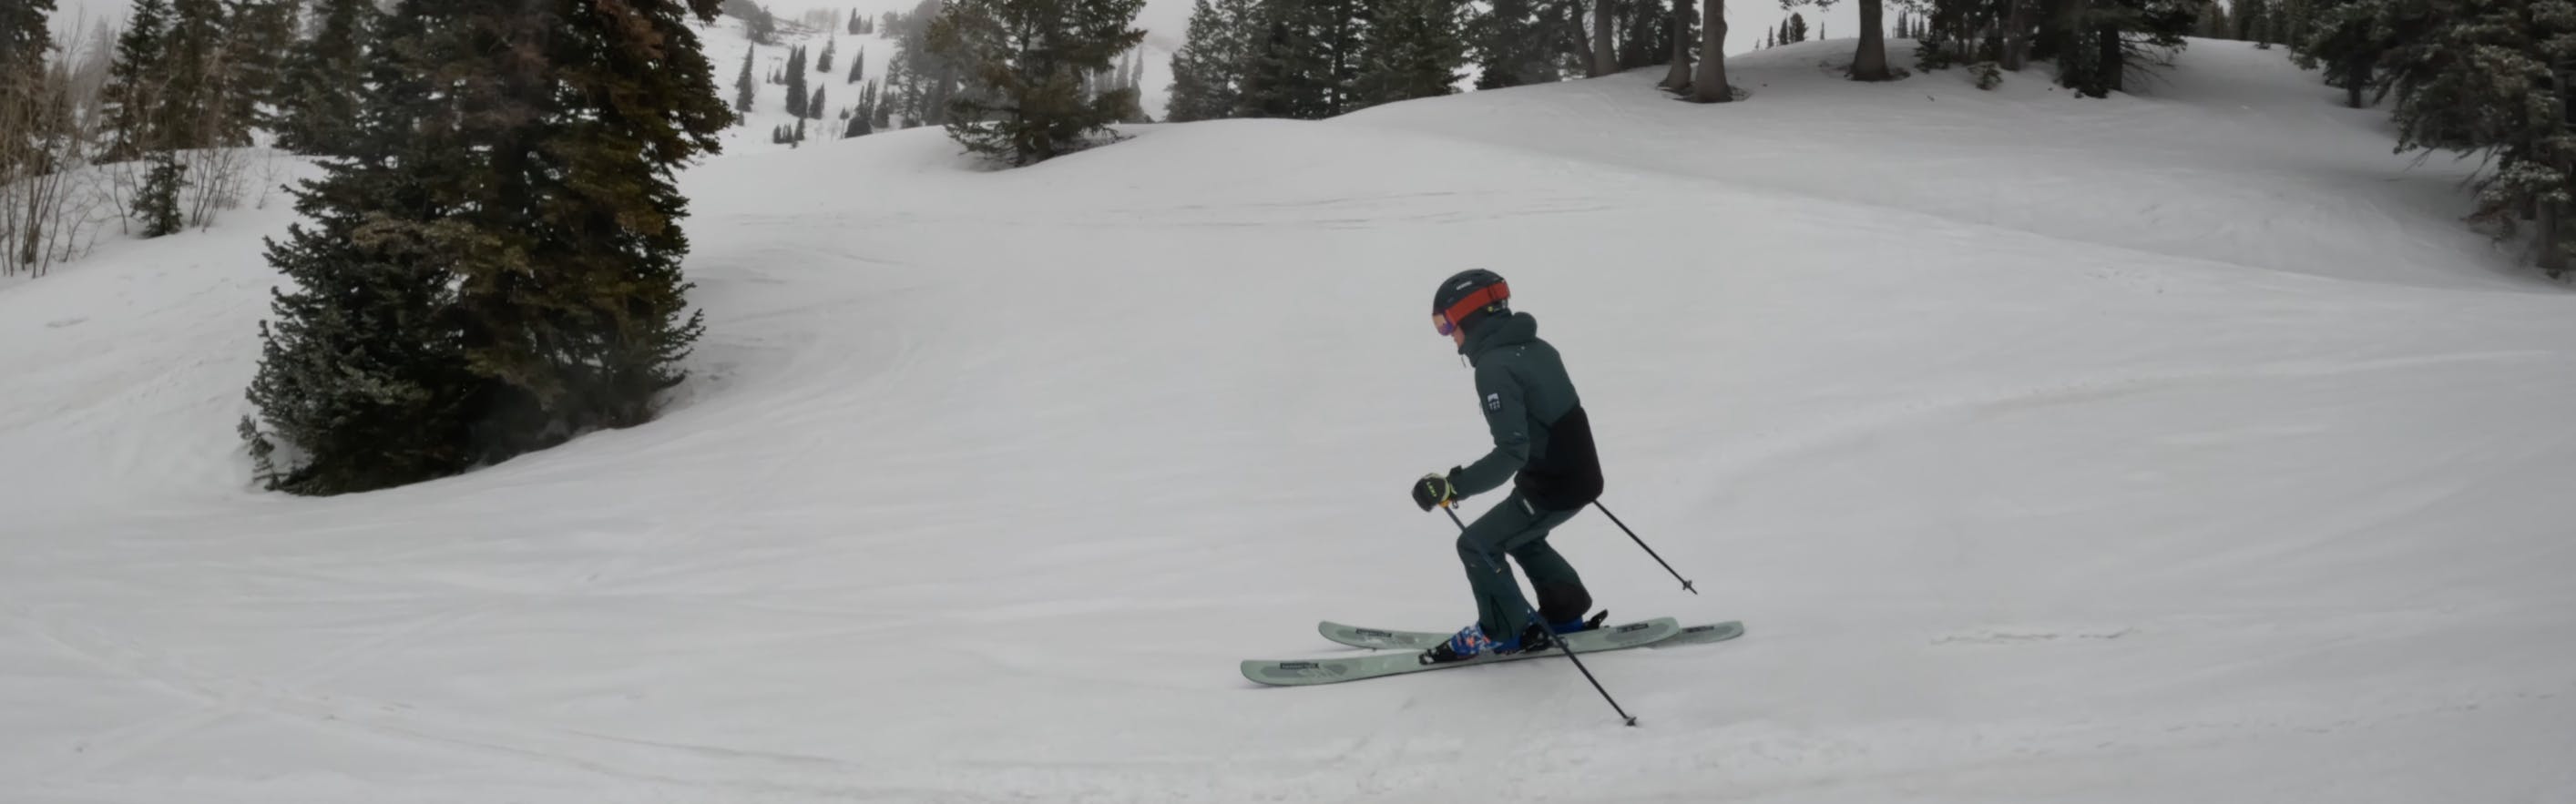 Skiing the Planet: Salomon Driver Ski Helmet Review